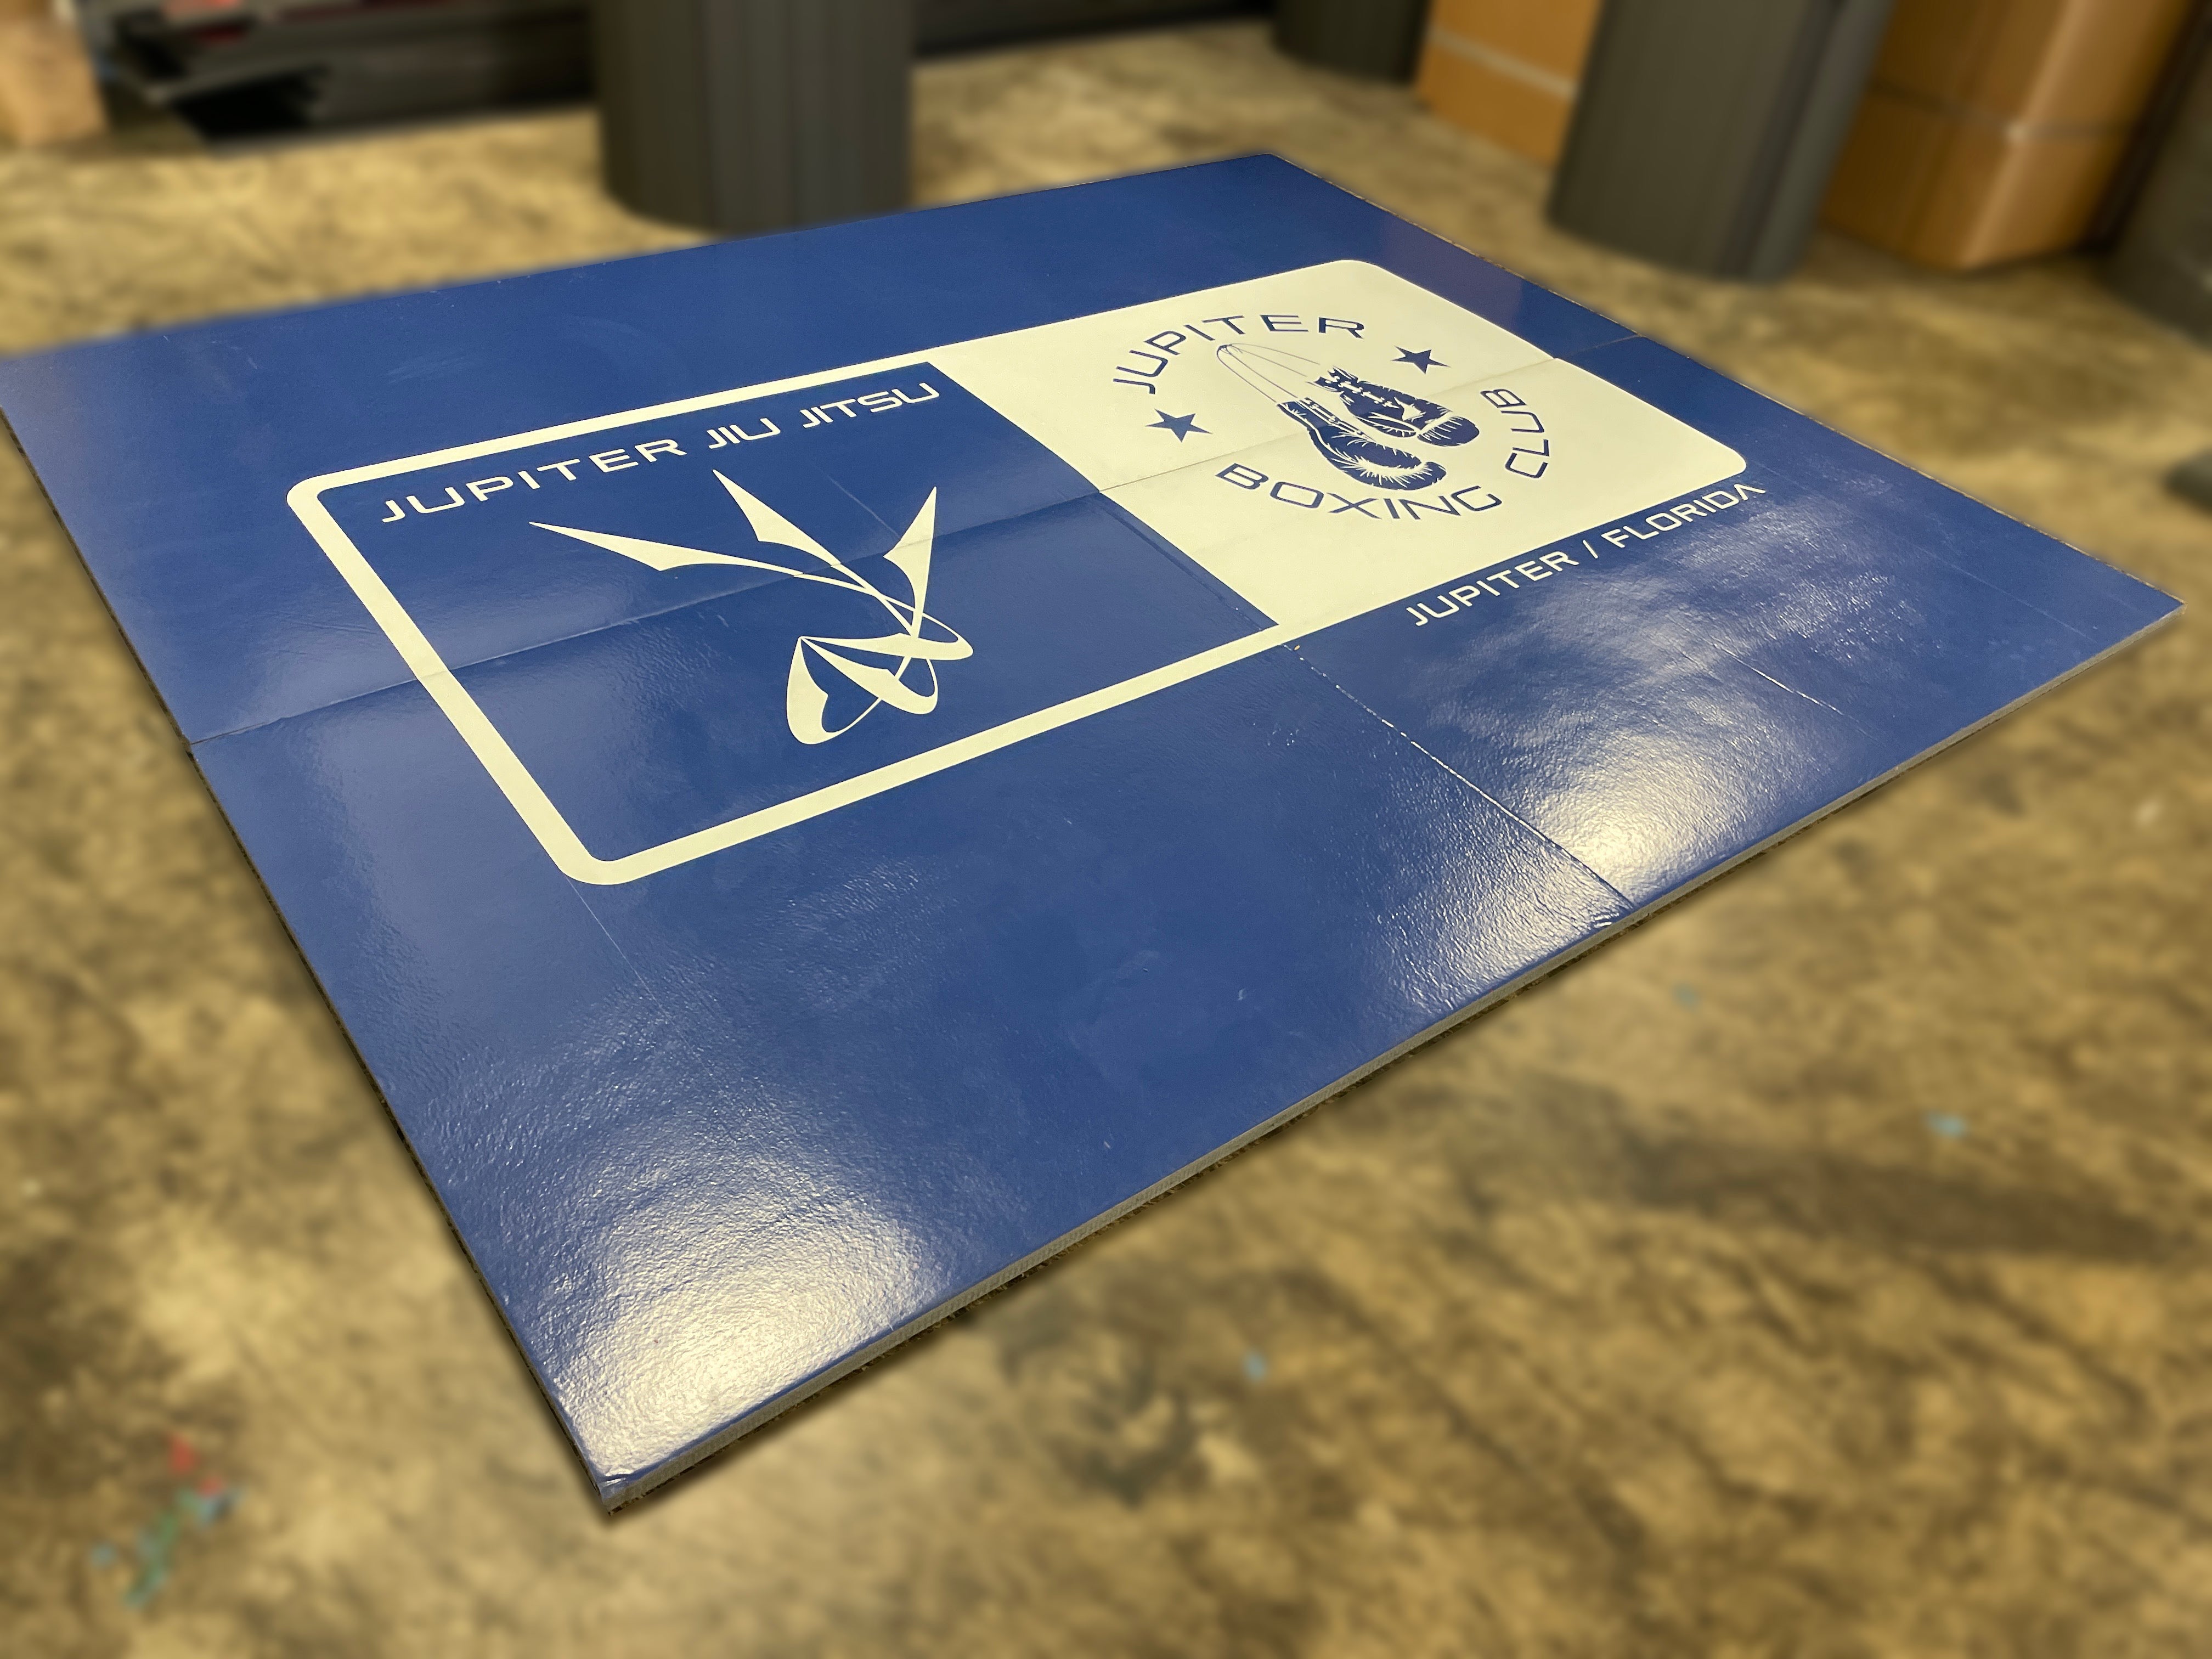 Clearance 12'  x 10’  blue mat with logo error Roll-Up Mat print flaw